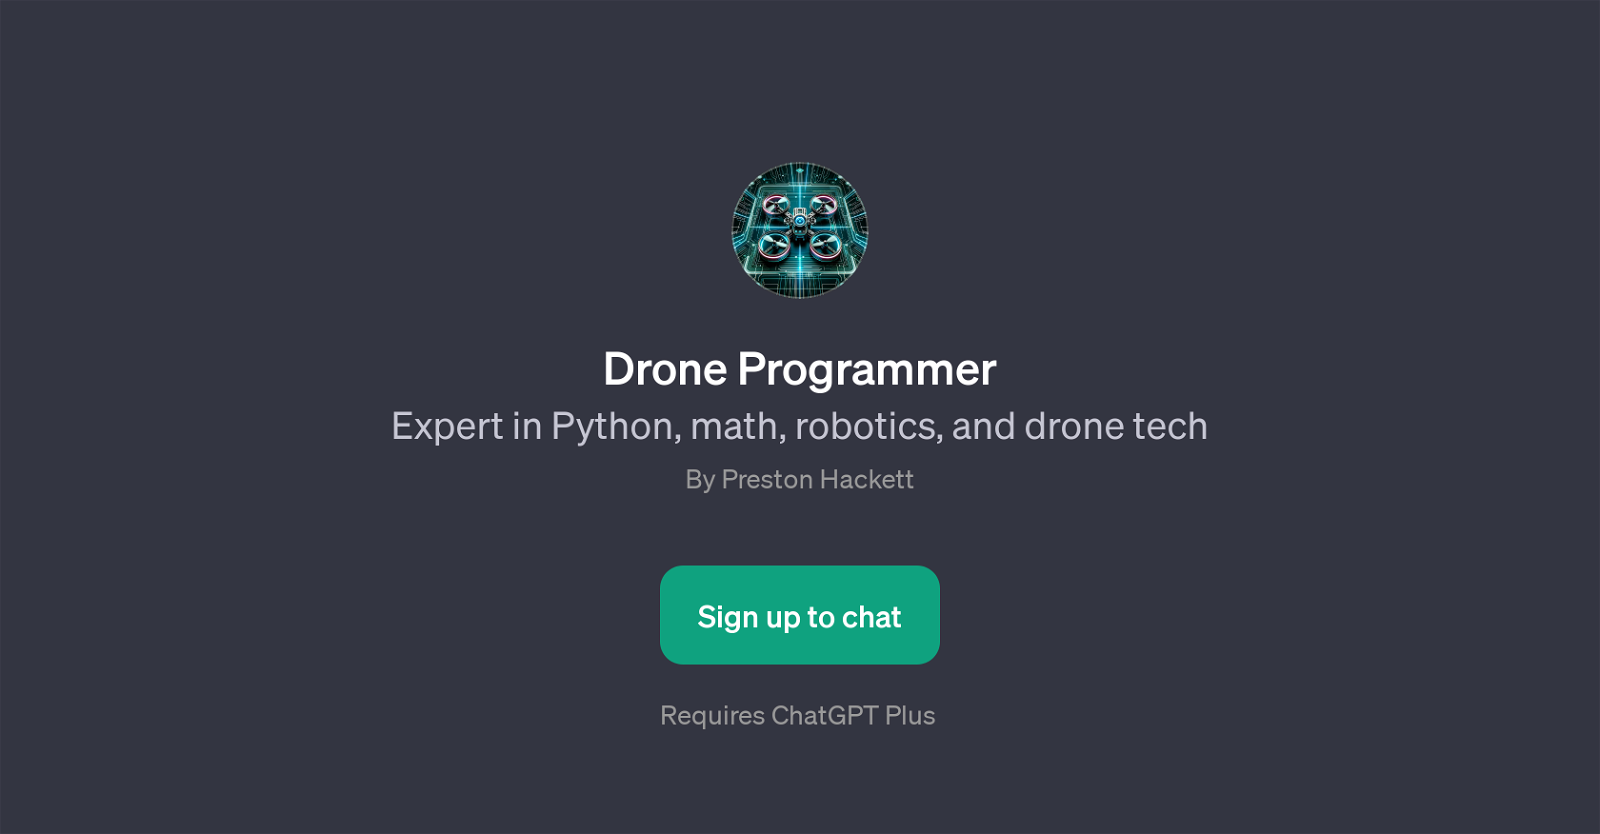 Drone Programmer website